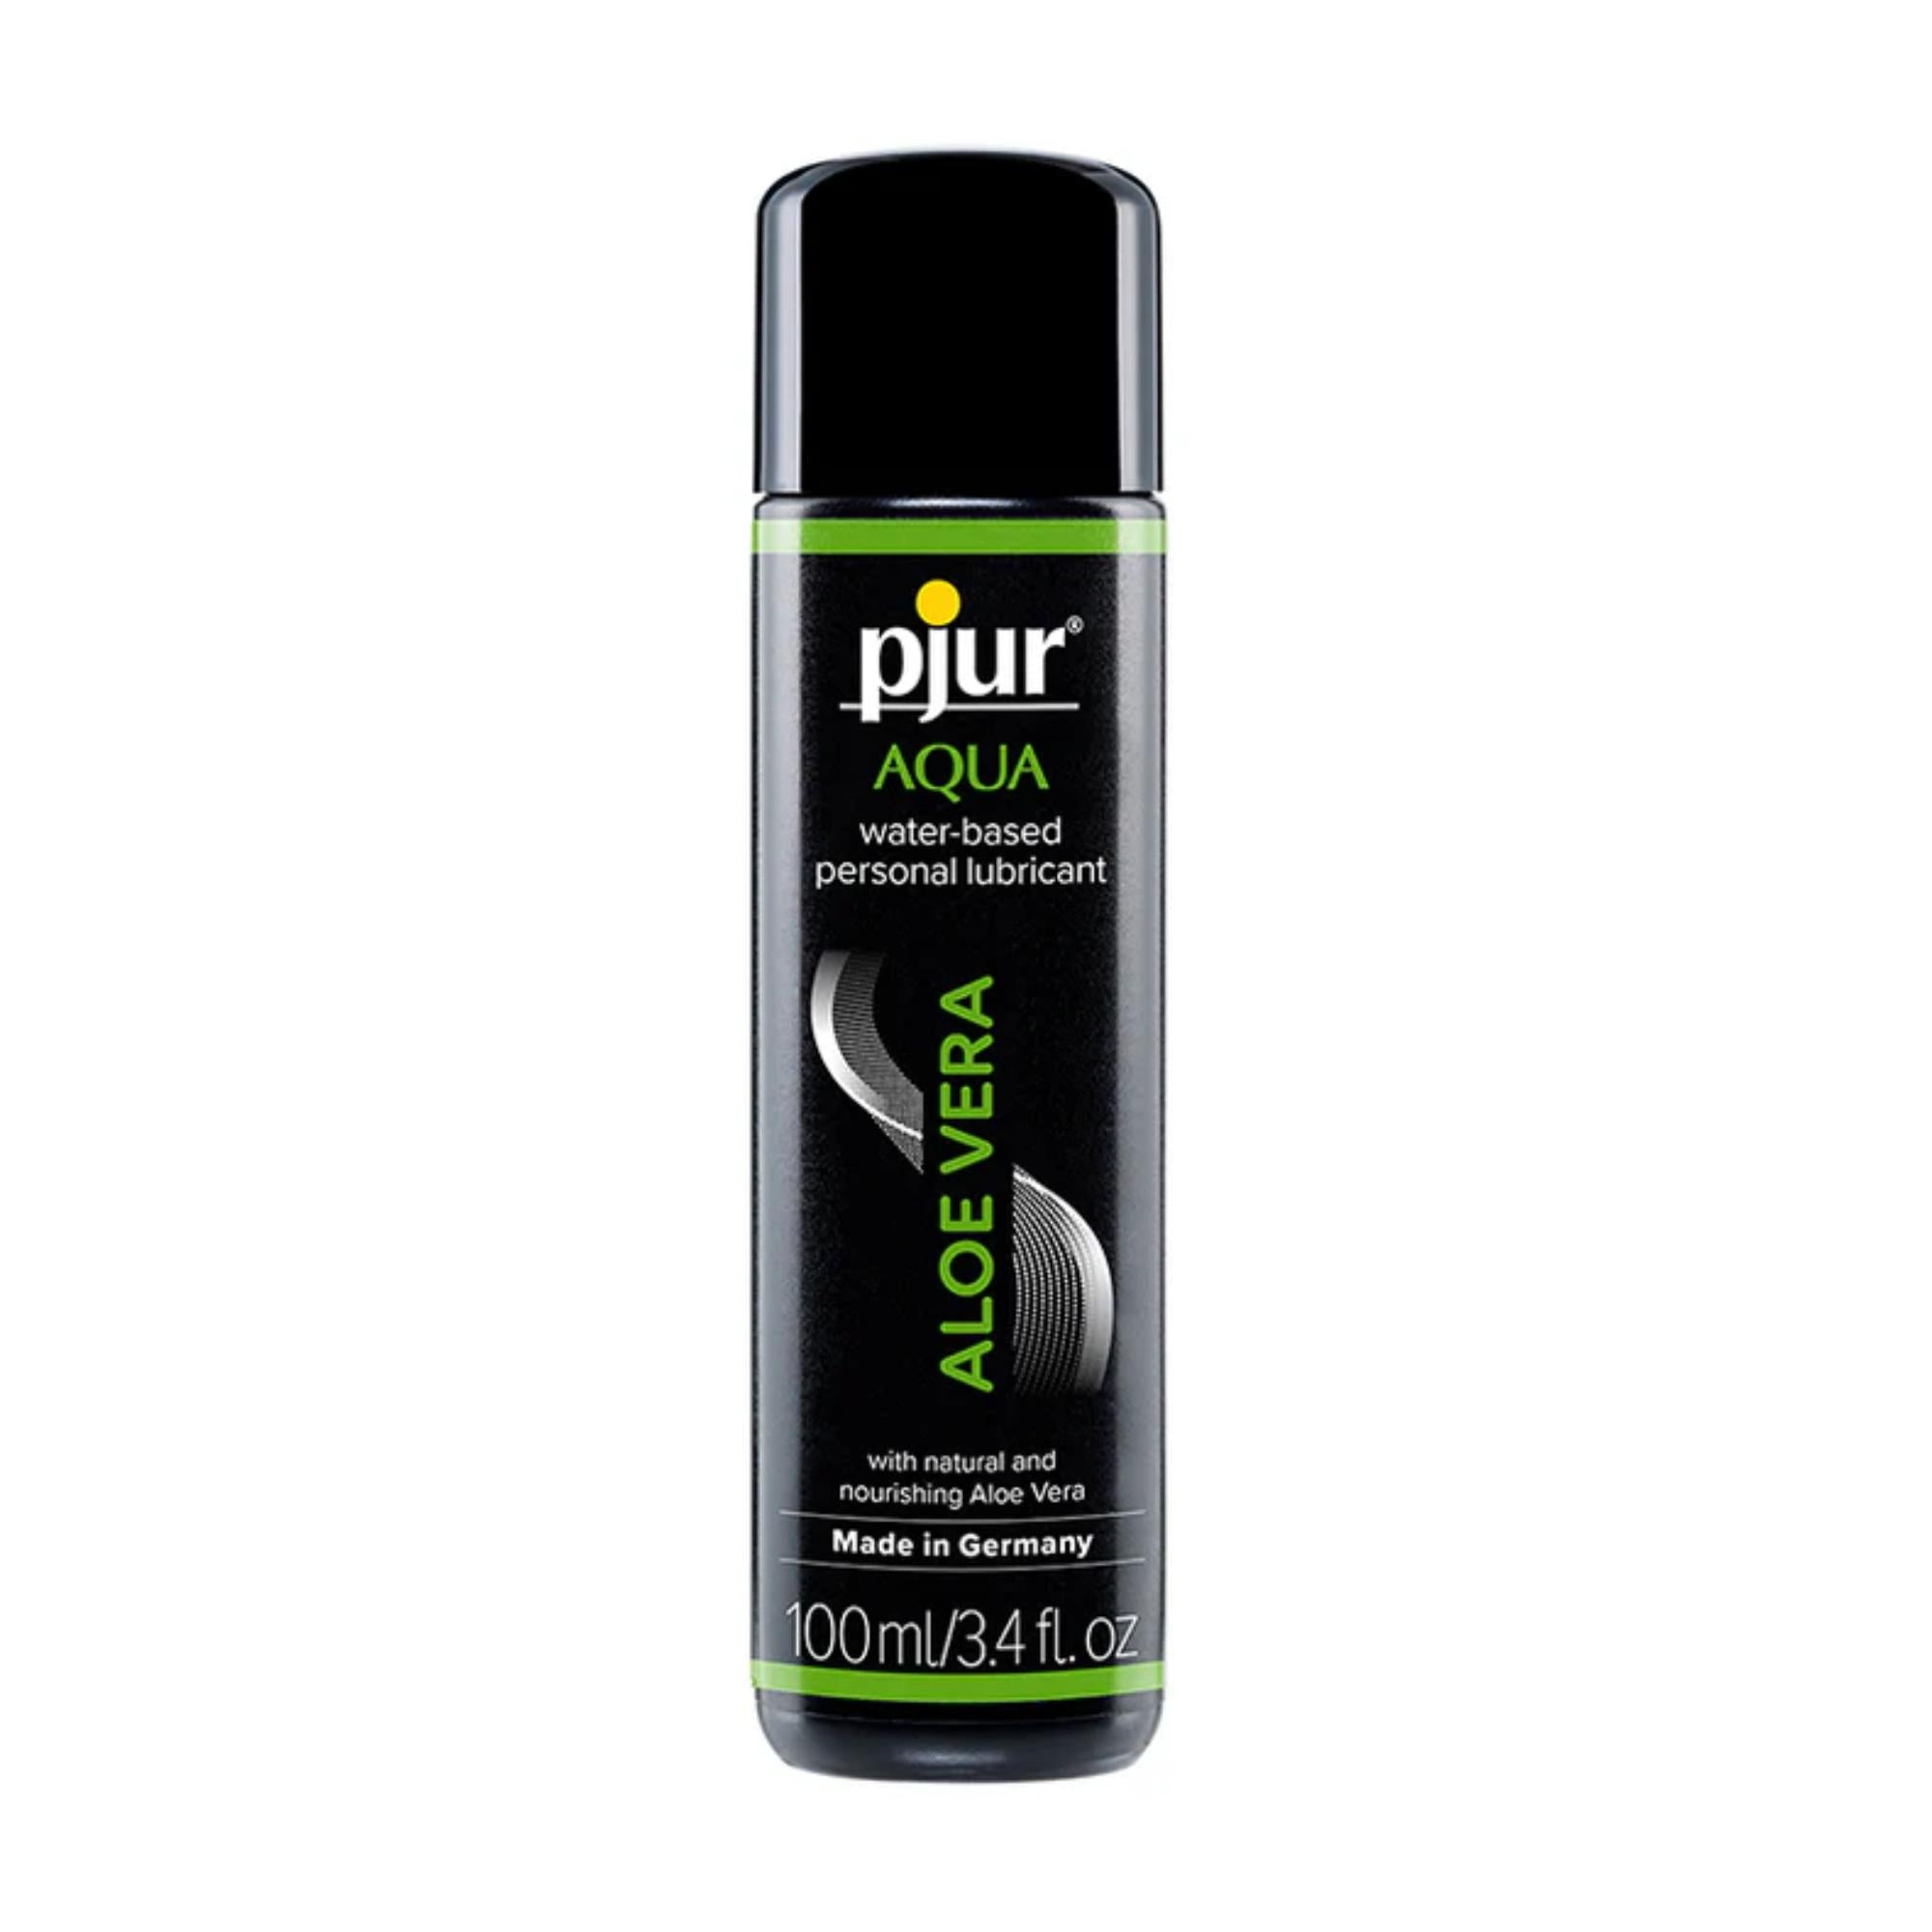 Pjur Aqua Aloe Vera Water-Based Personal Lubricant 100ml